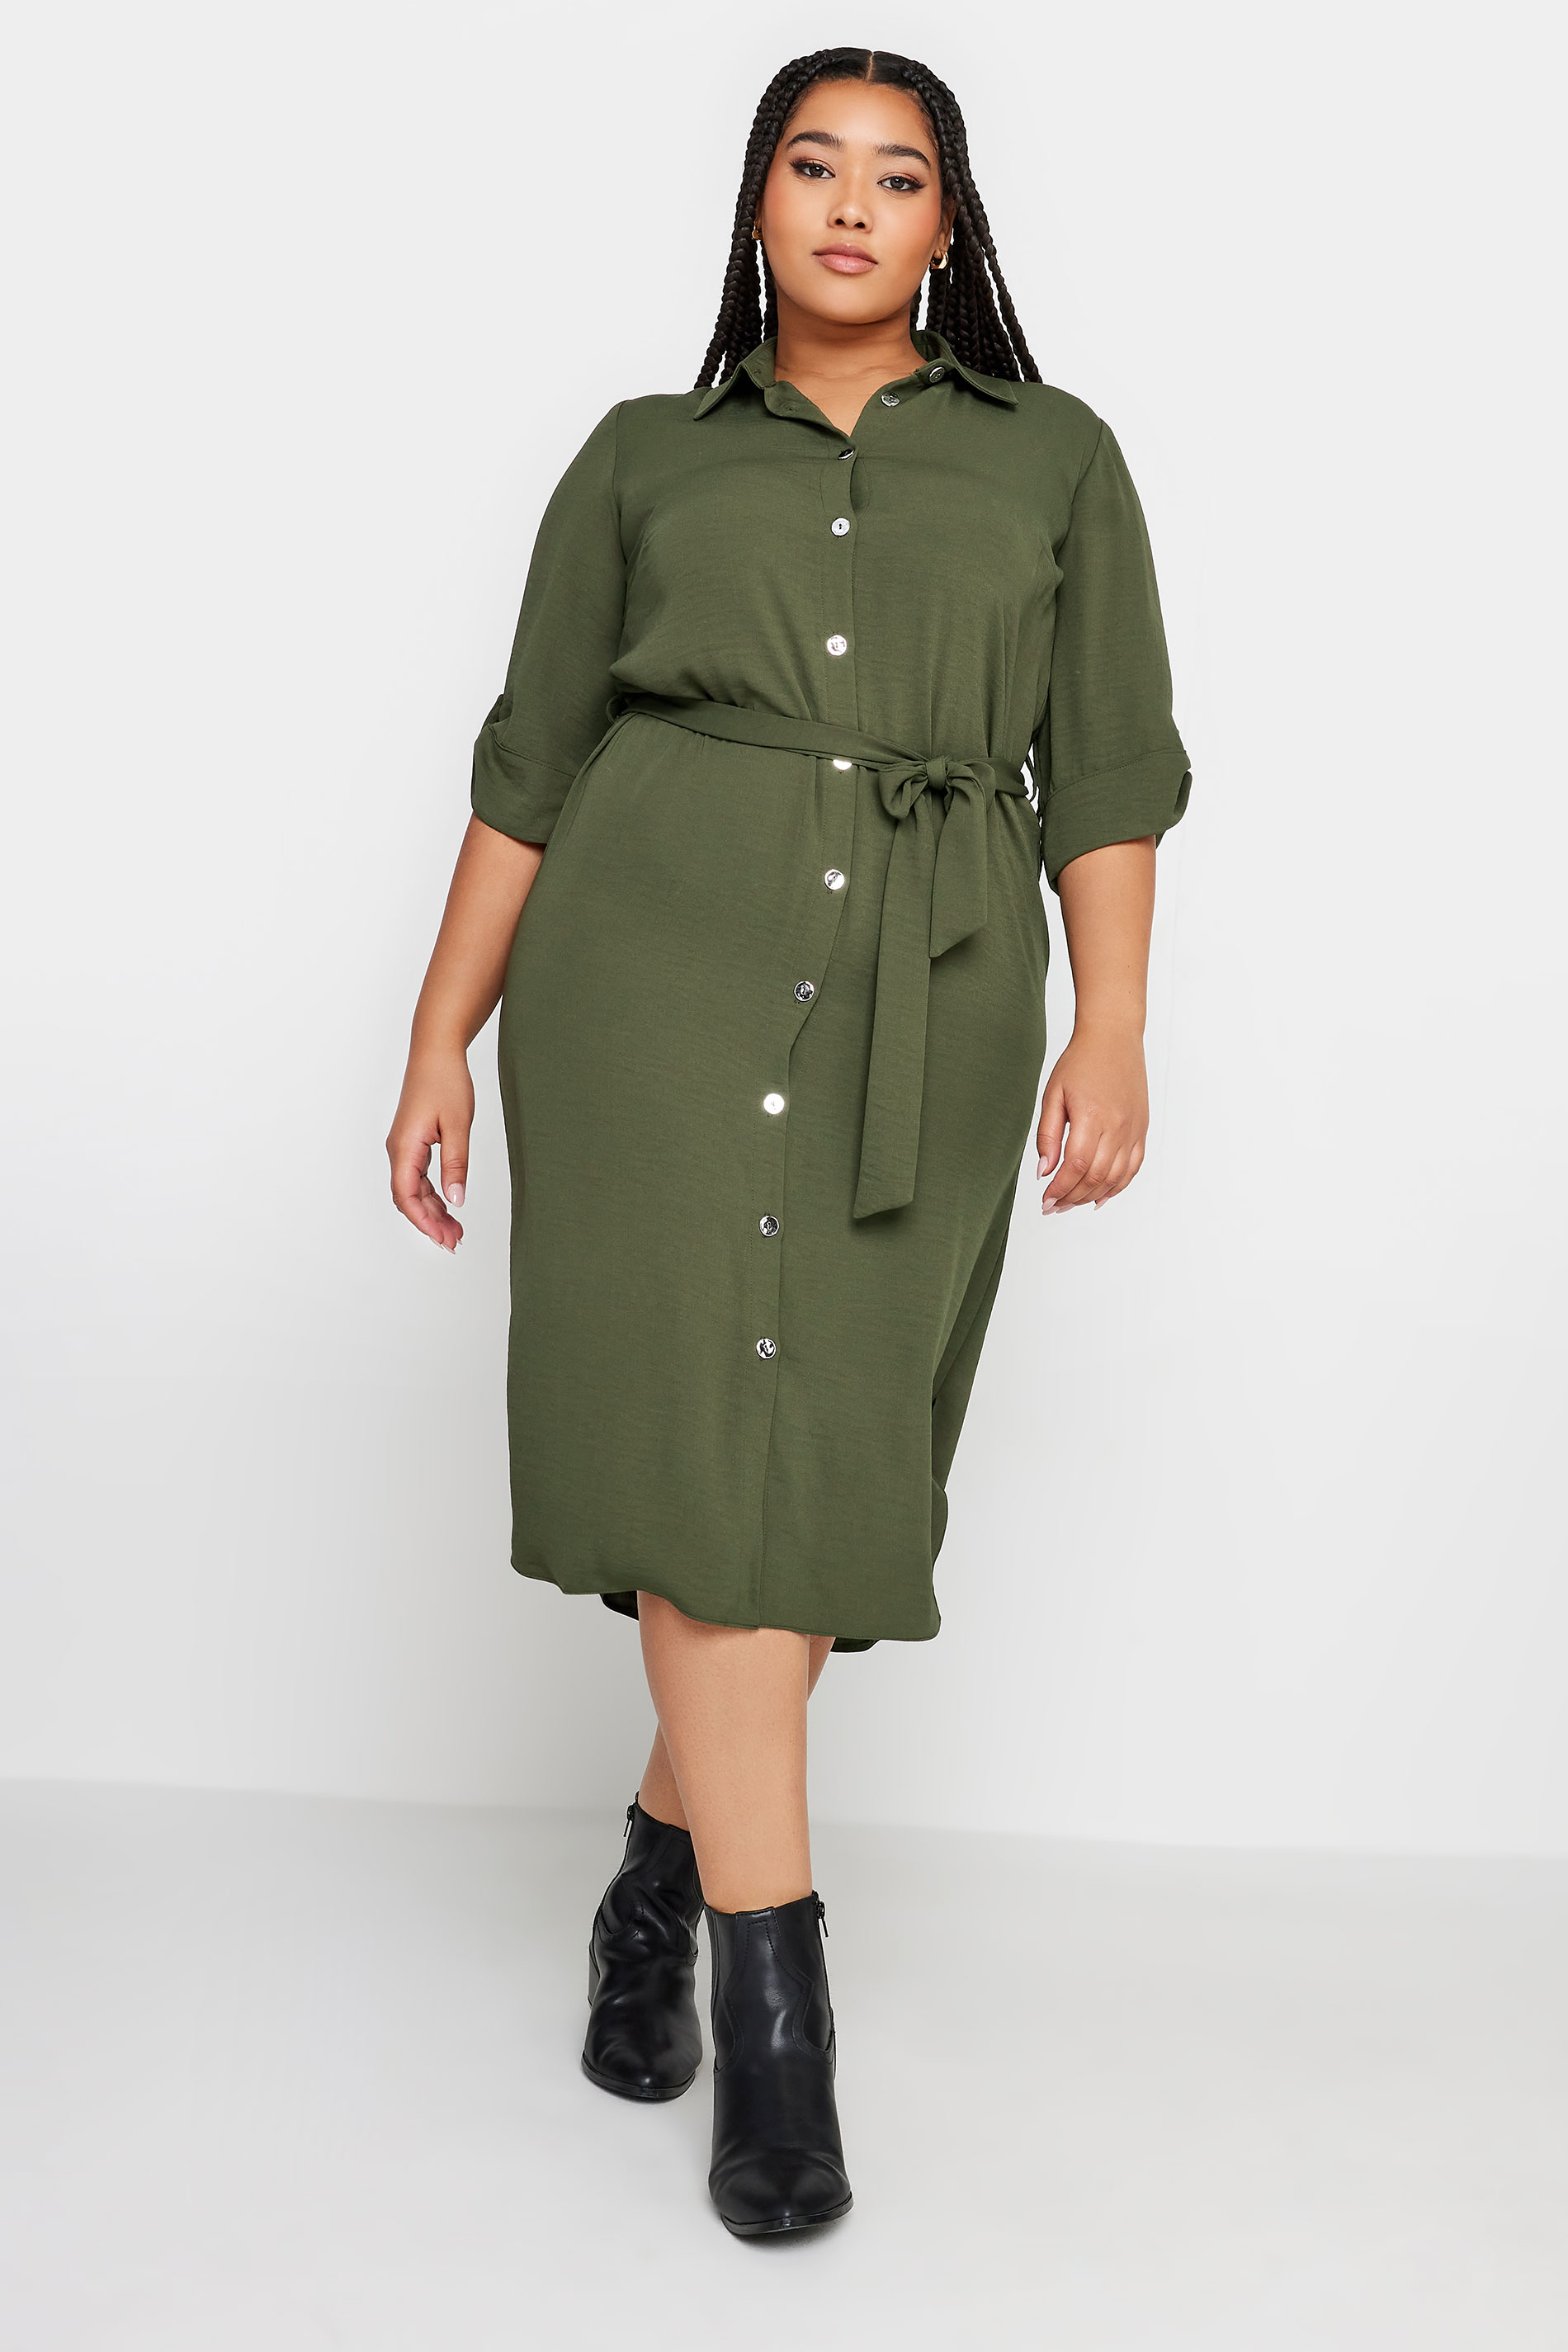 YOURS Plus Size Khaki Green Midi Shirt Dress | Yours Clothing 1